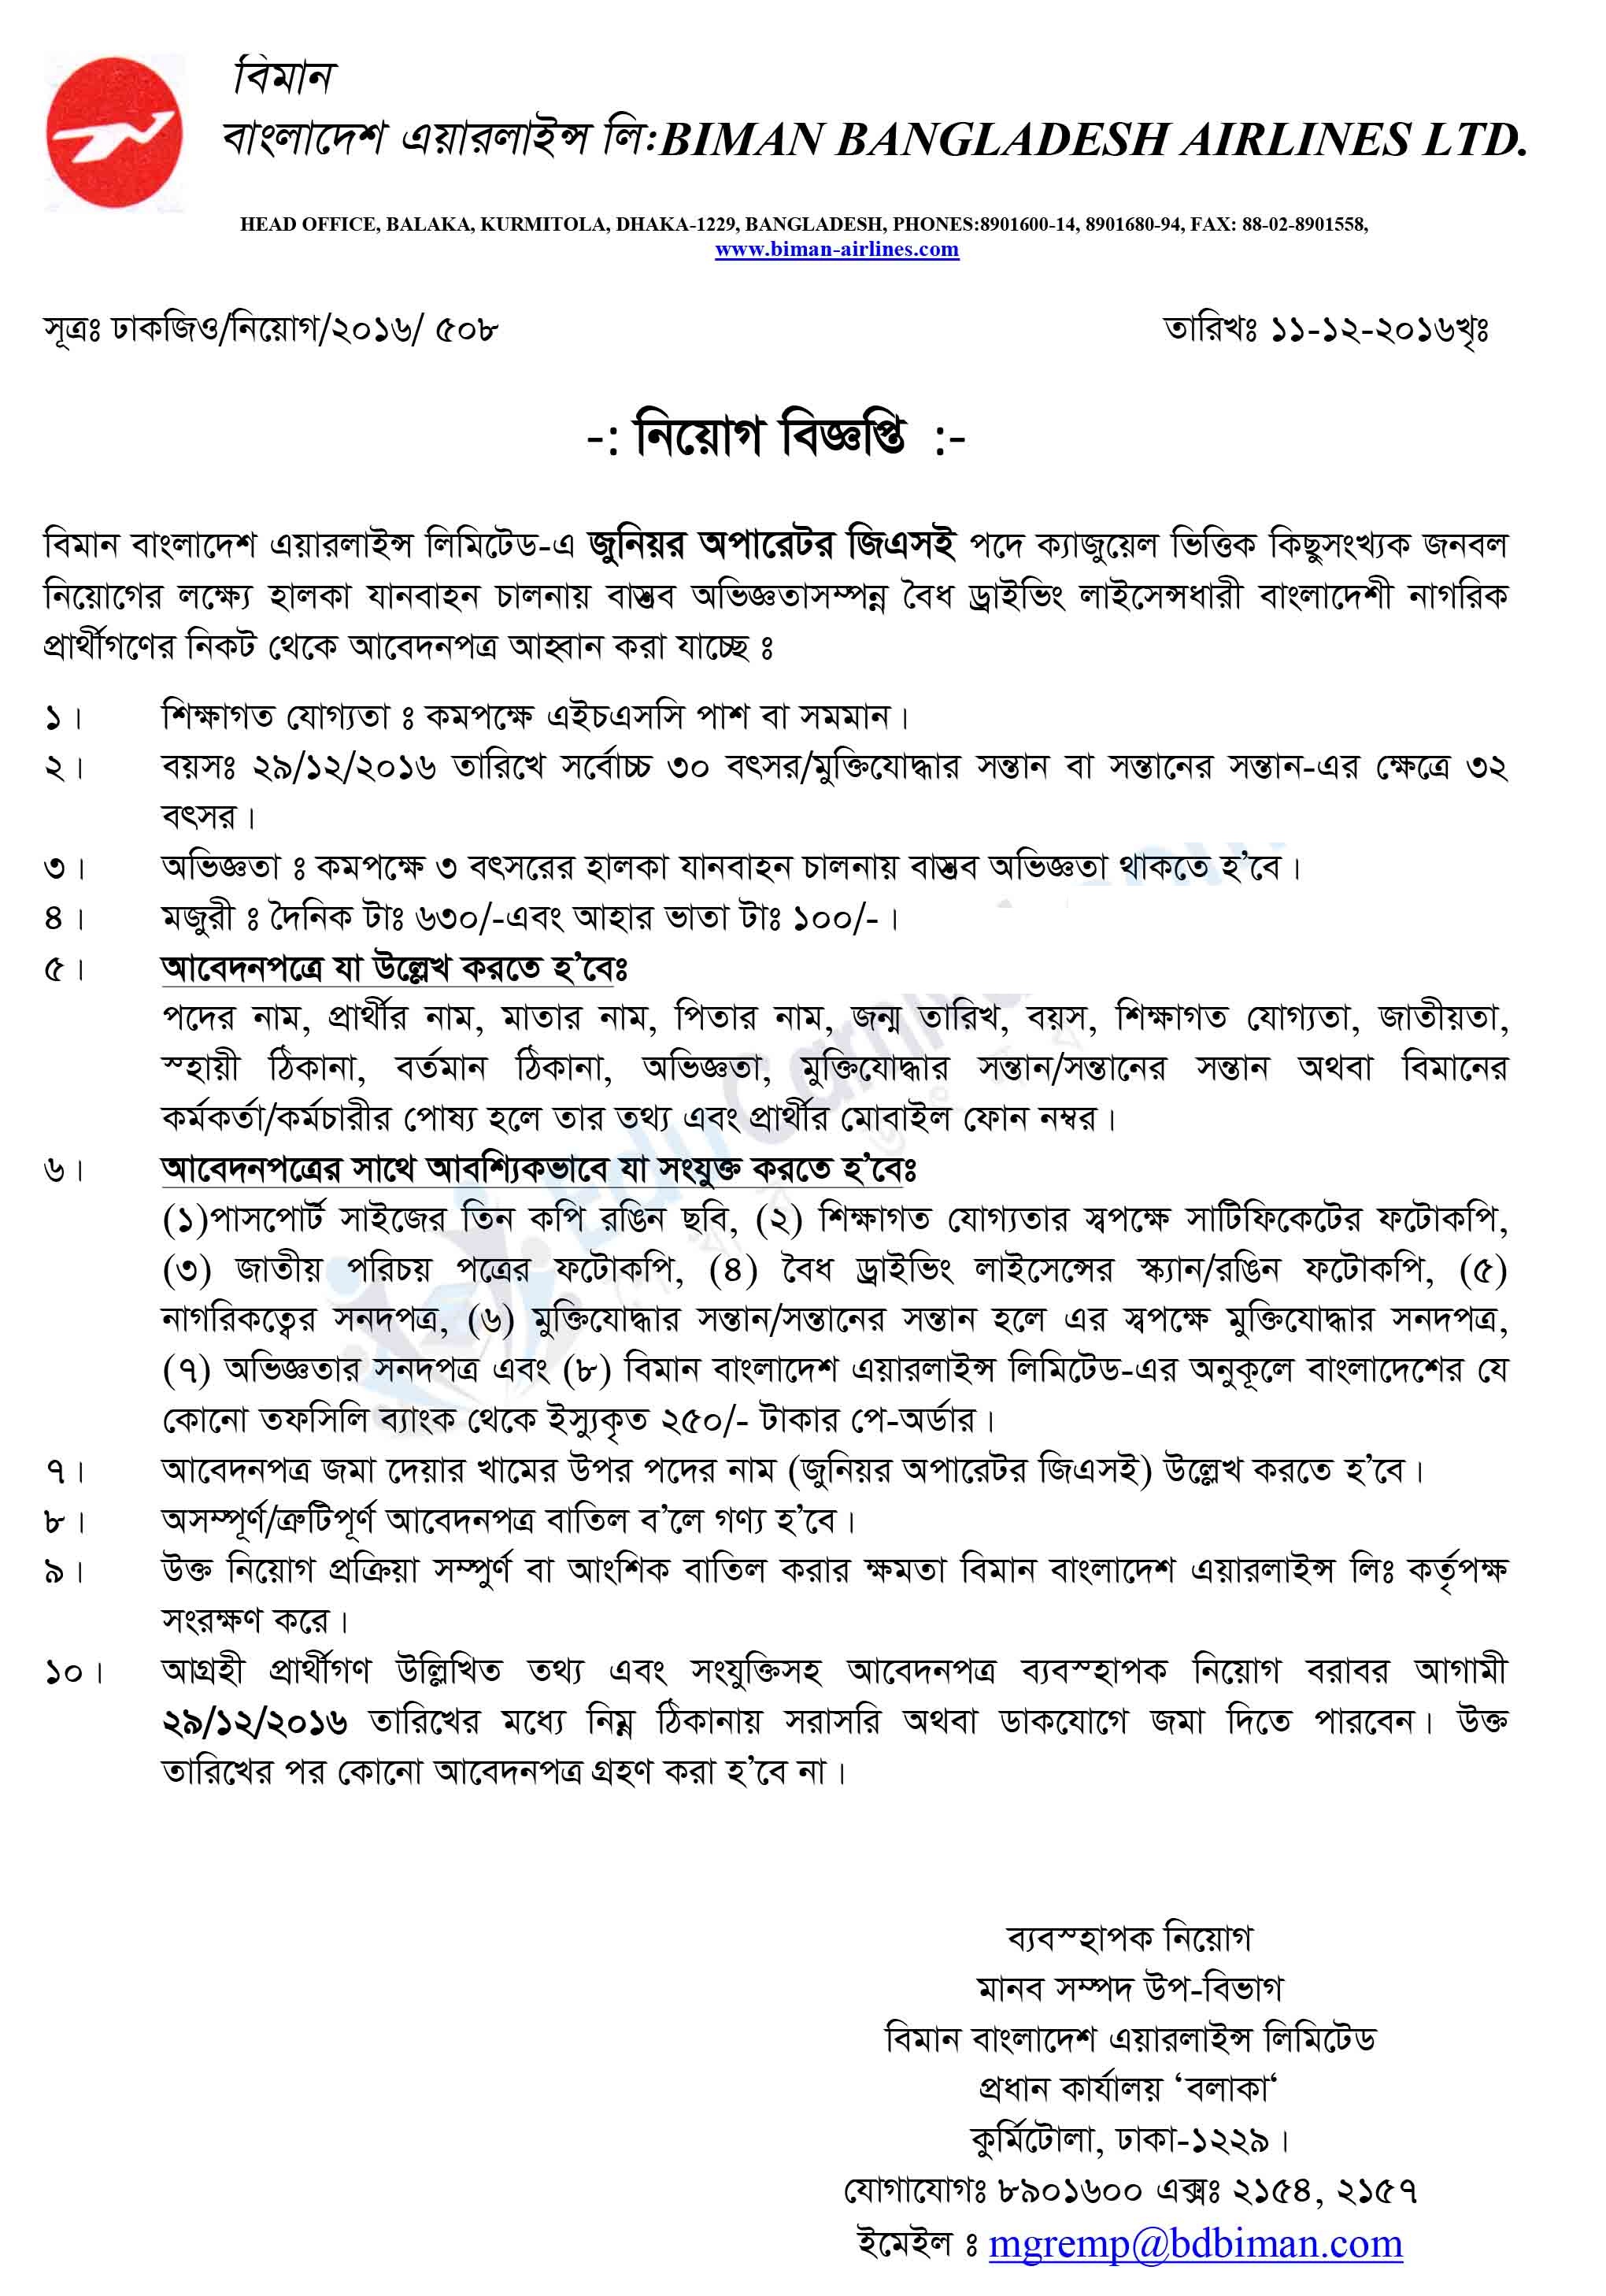 Biman Bangladesh Airlines Job Circular December 2016